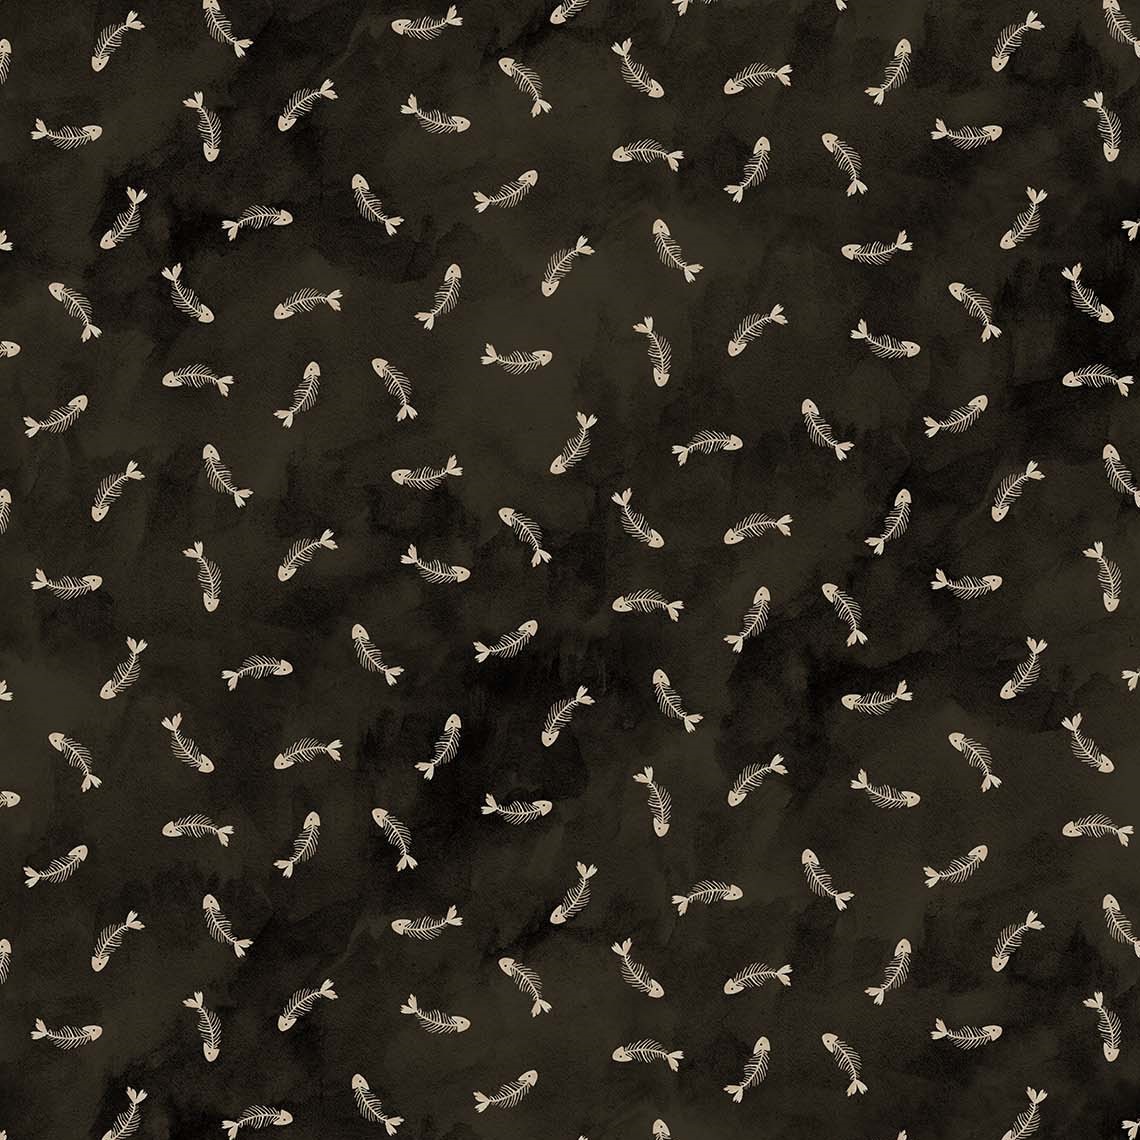 Quilting Fabric - Fish Bones on Black from Marcel for Figo Fabrics 